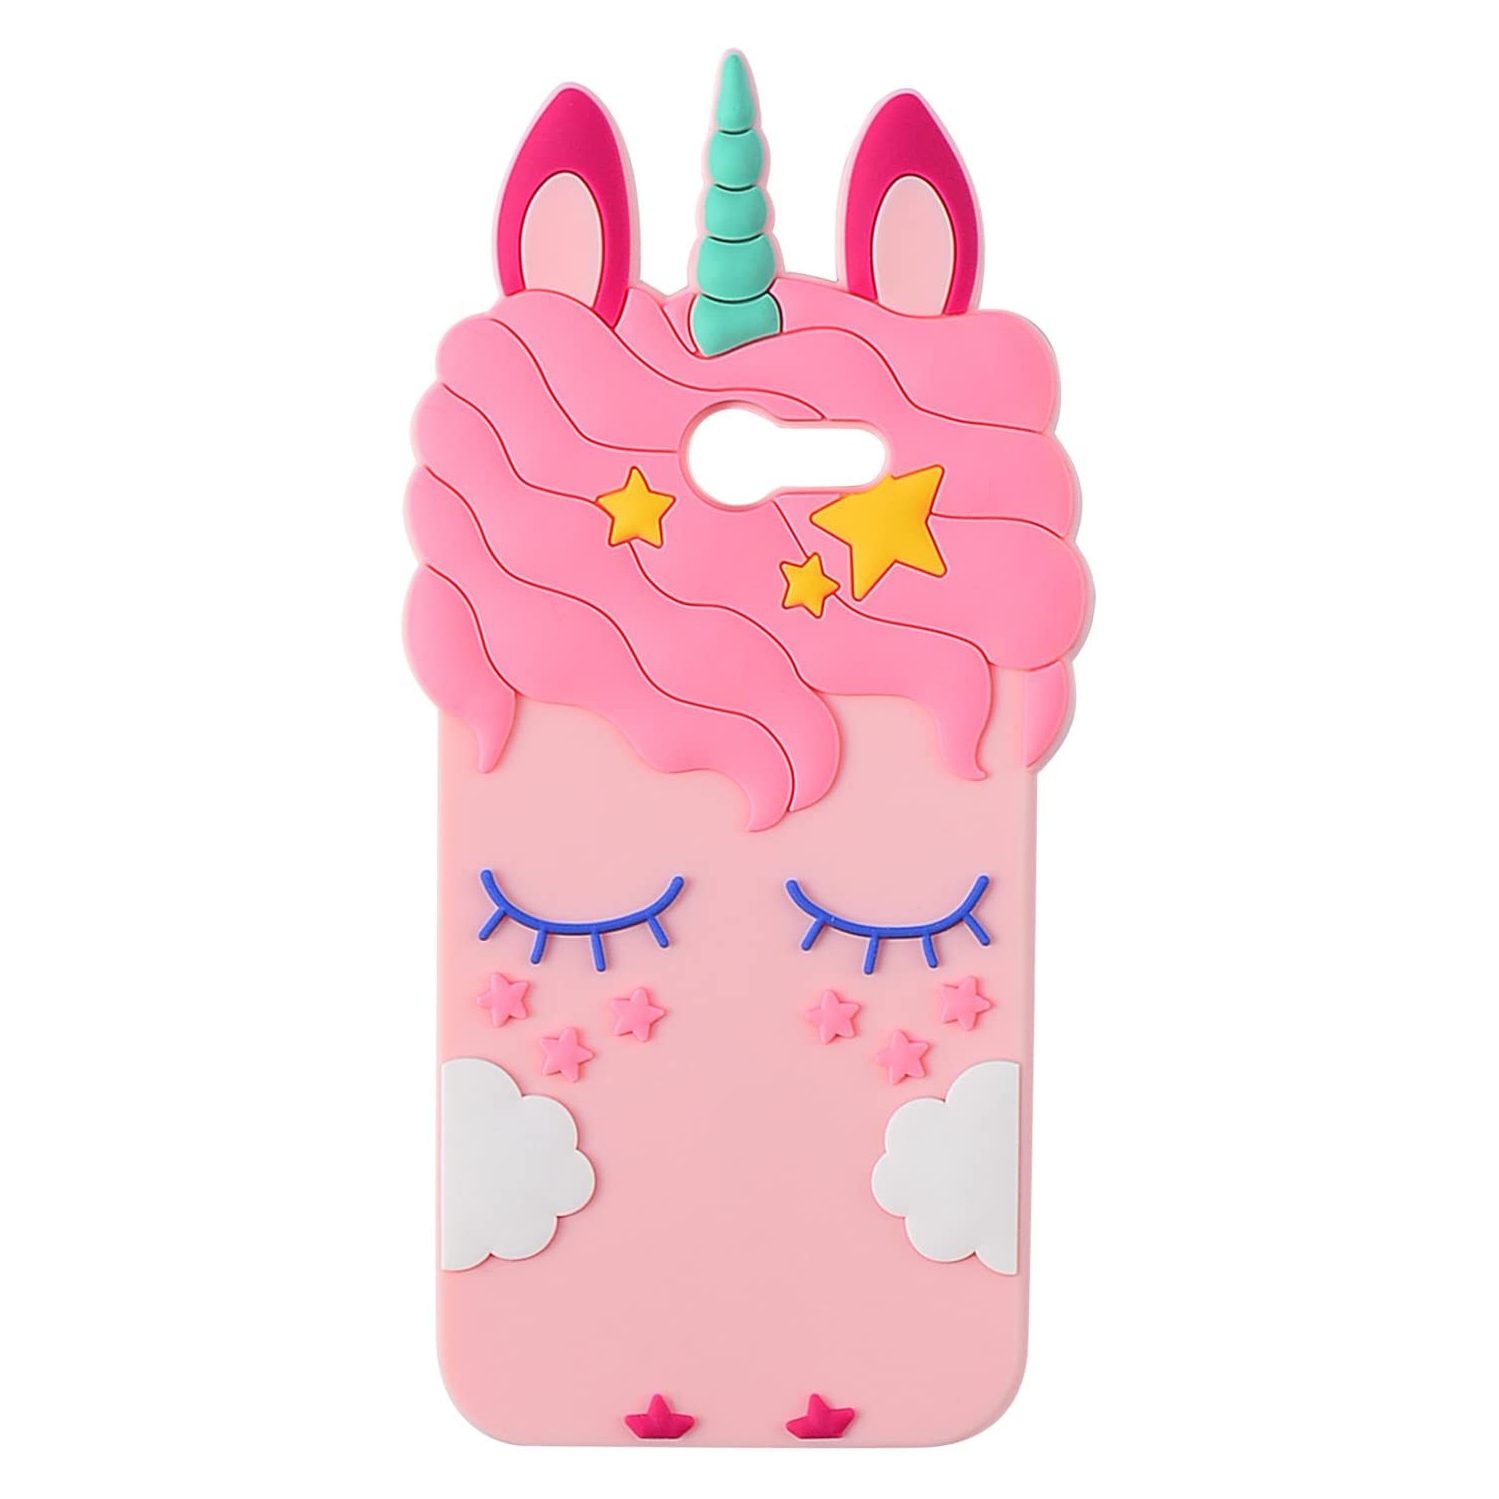 TopSZ Pink Unicorn Case for Samsung Galaxy J3 Emerge/J3 Prime/J3 Eclipse,3D Cartoon Horse Silicone Kawaii Animal Cute Charact